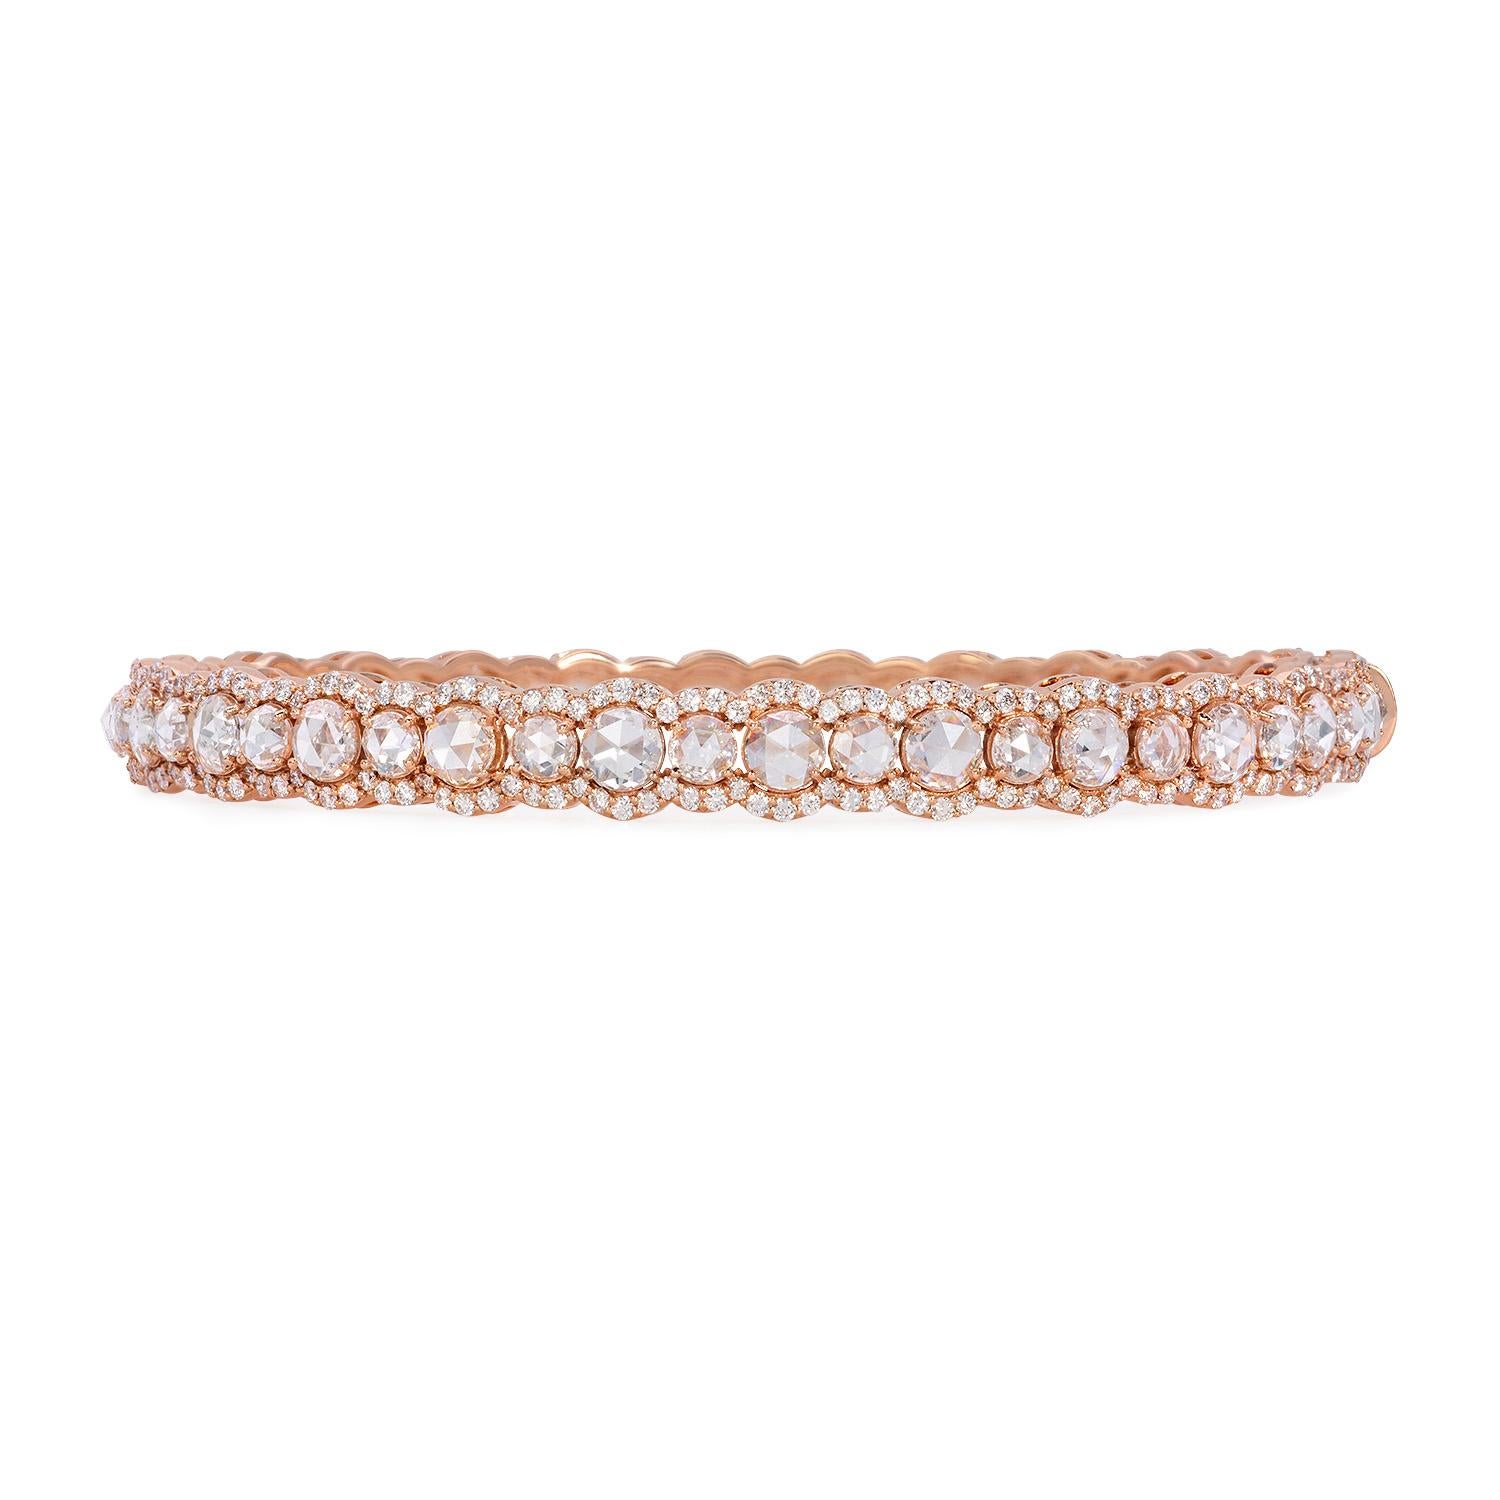 Modern Set of 3 Tennis Bracelets - Rose Cut Diamonds 7.62 carats each in 18K Gold  For Sale